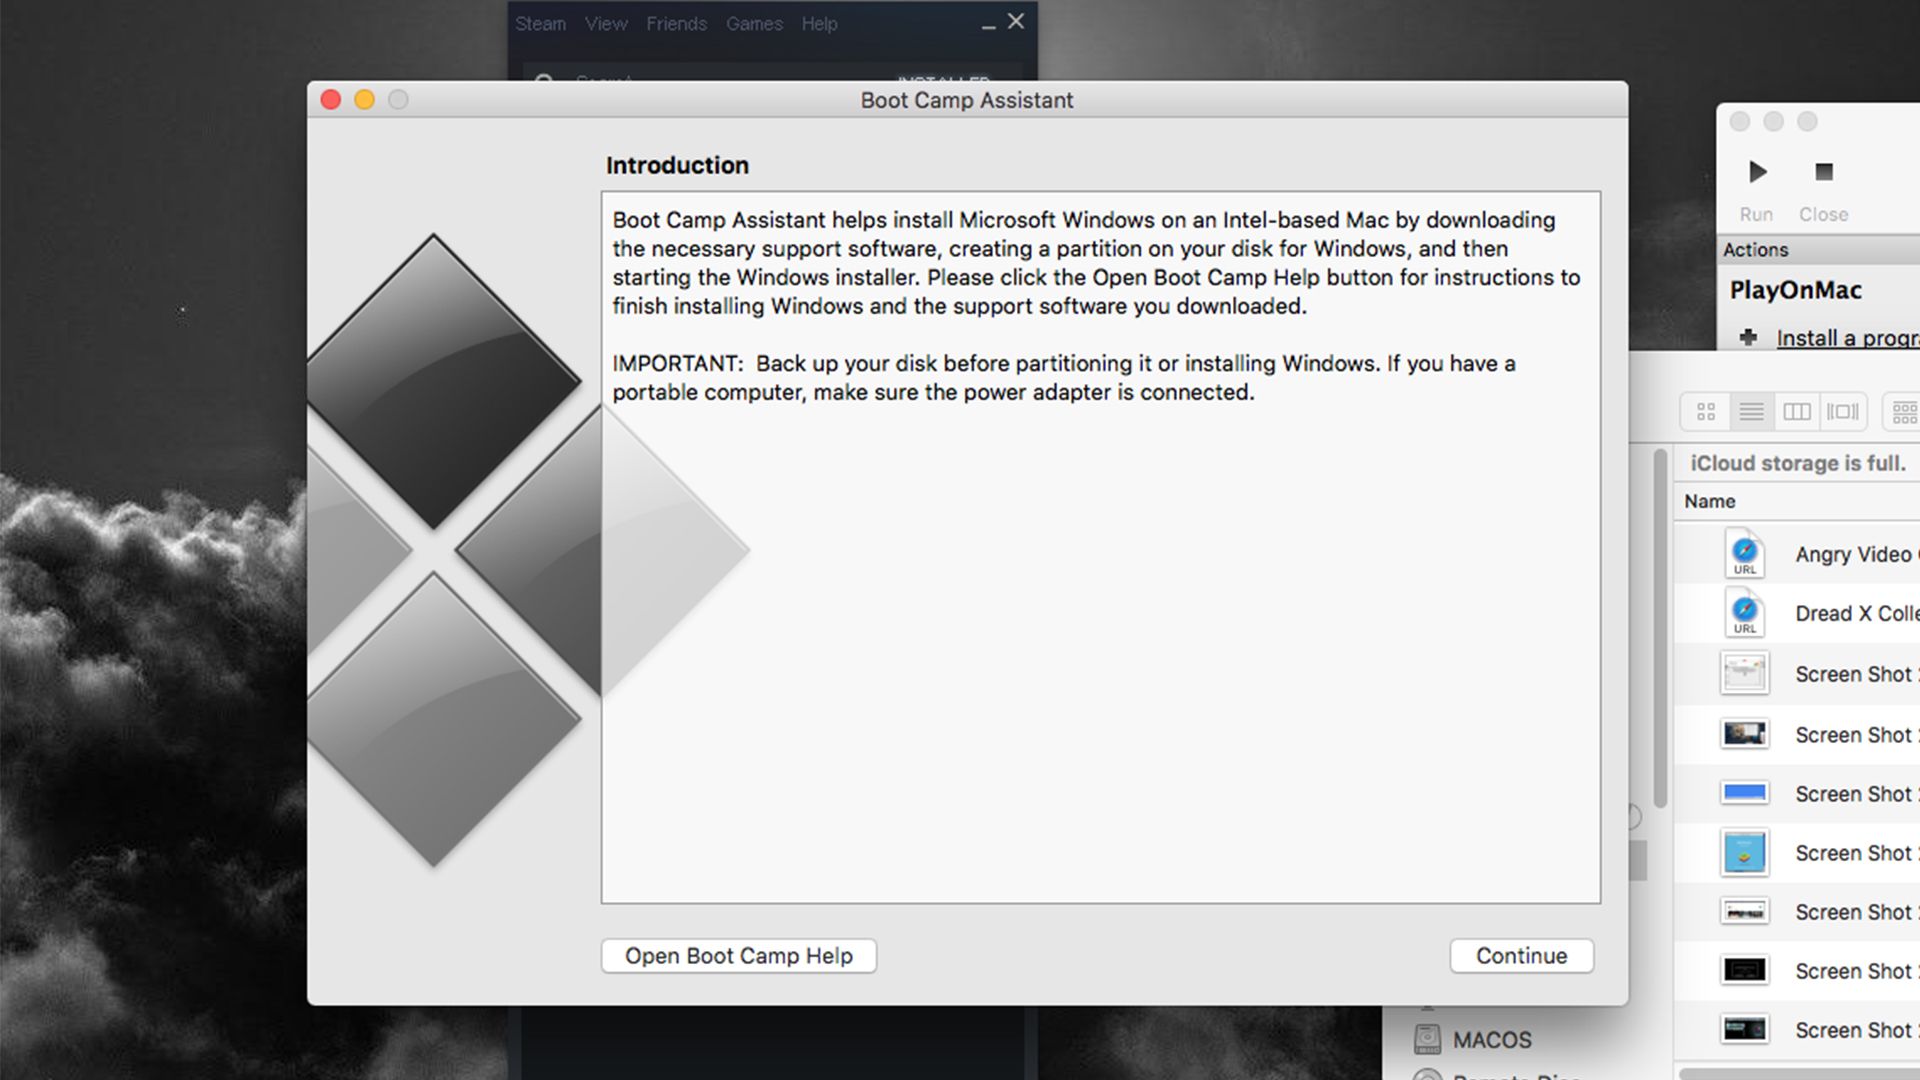 BootCamp Assistant on iMac Desktop